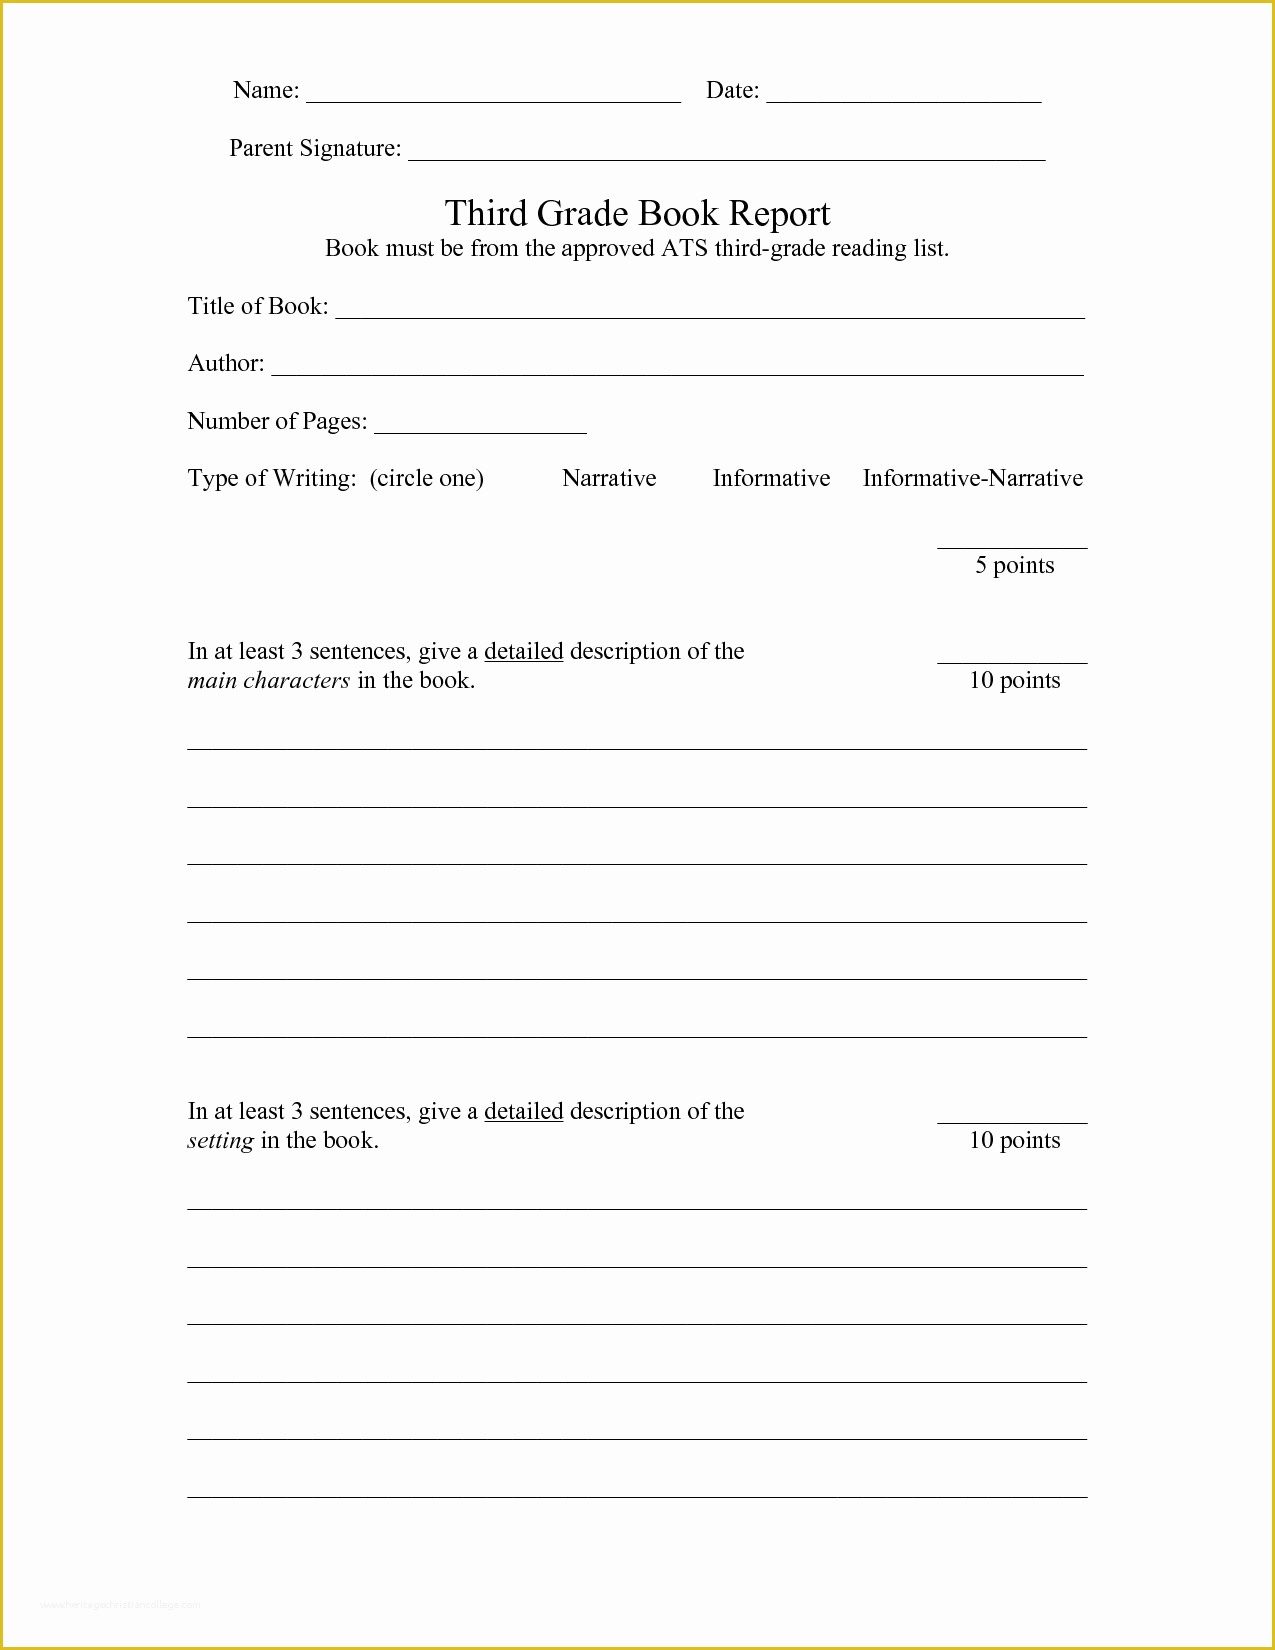 3rd Grade Book Report Template Free Of Book Report Template 4th Grade Pdf School Report